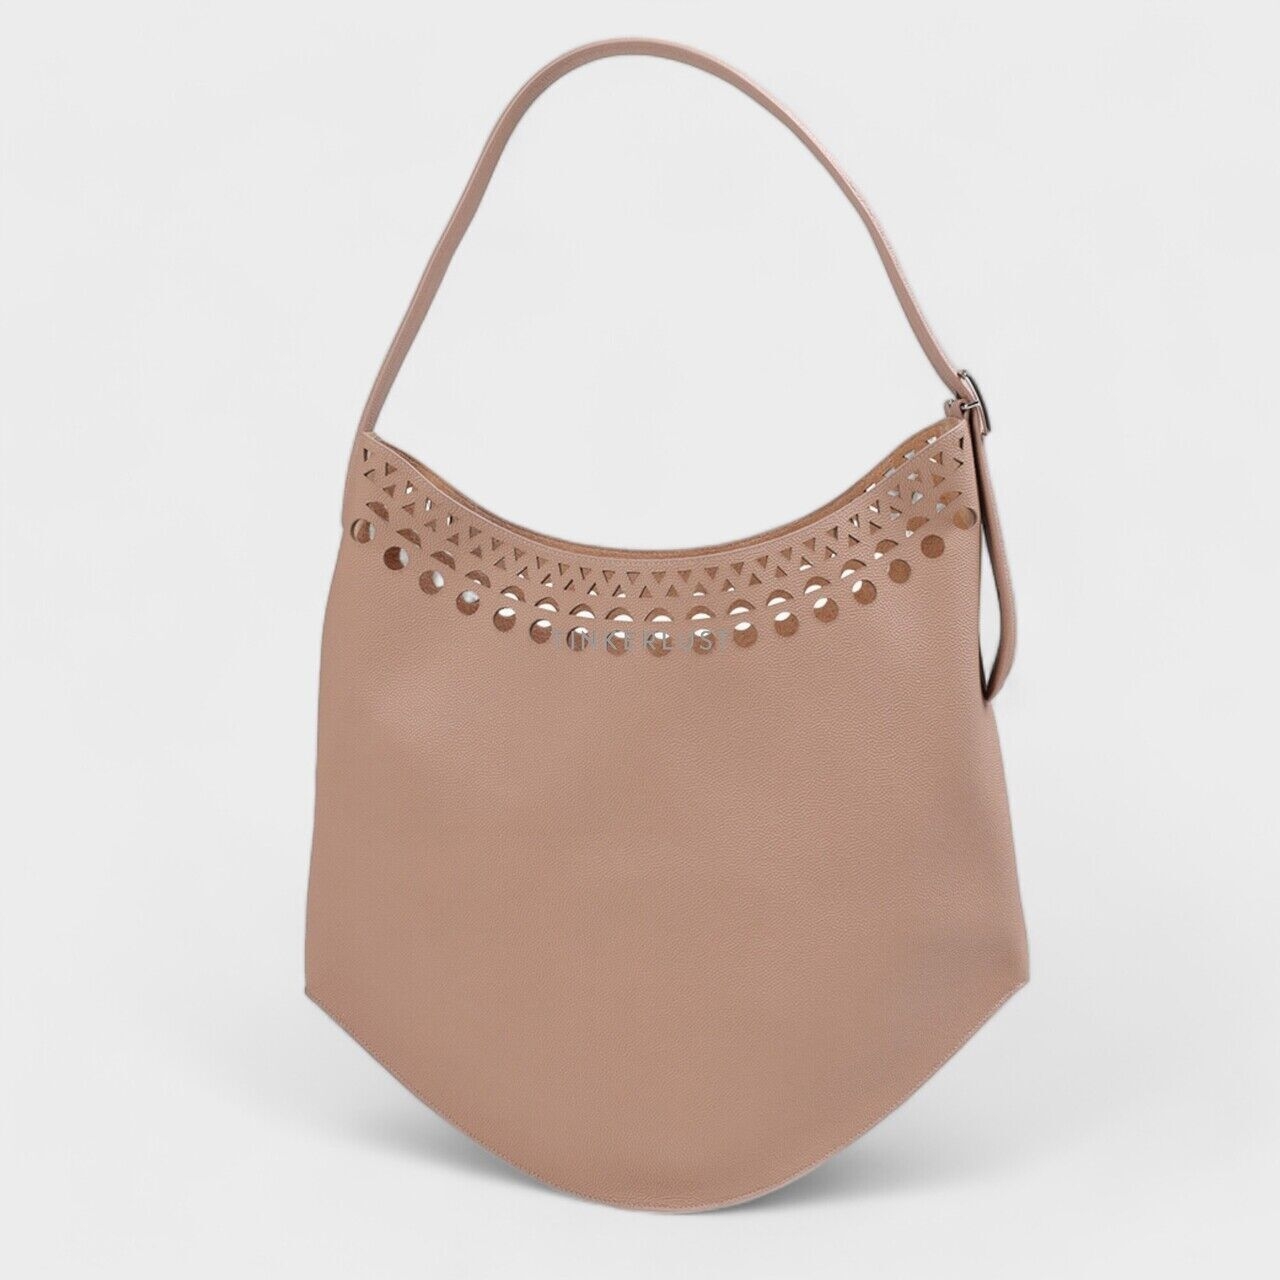 Alaia Le Gail Large Sand Leather Shoulder Bag